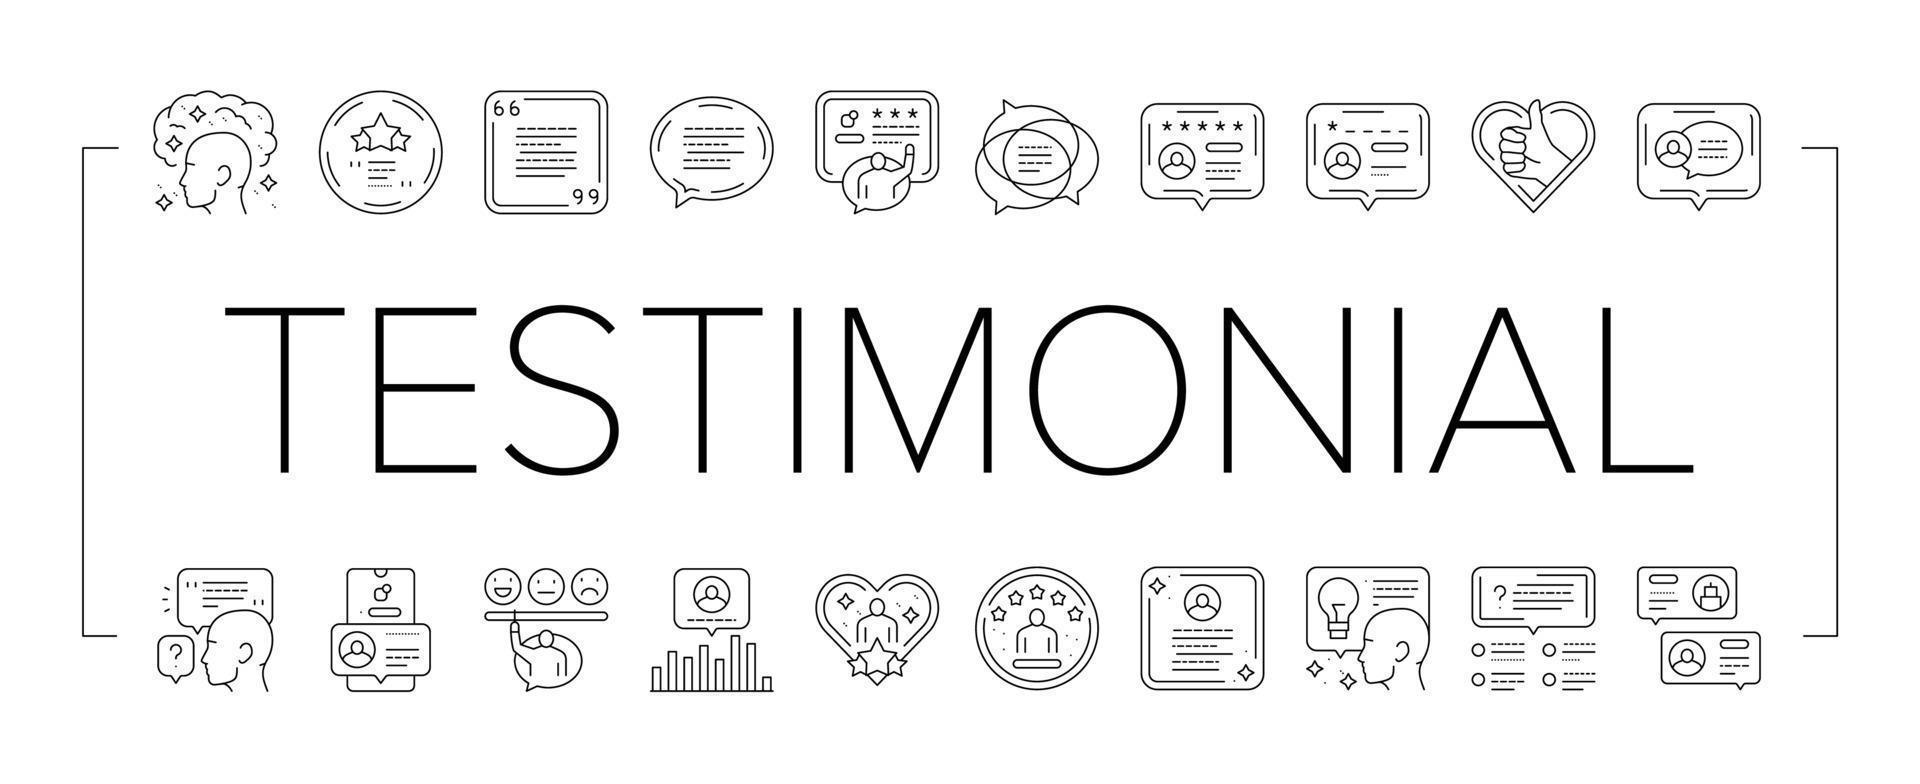 testimonial customer review icons set vector